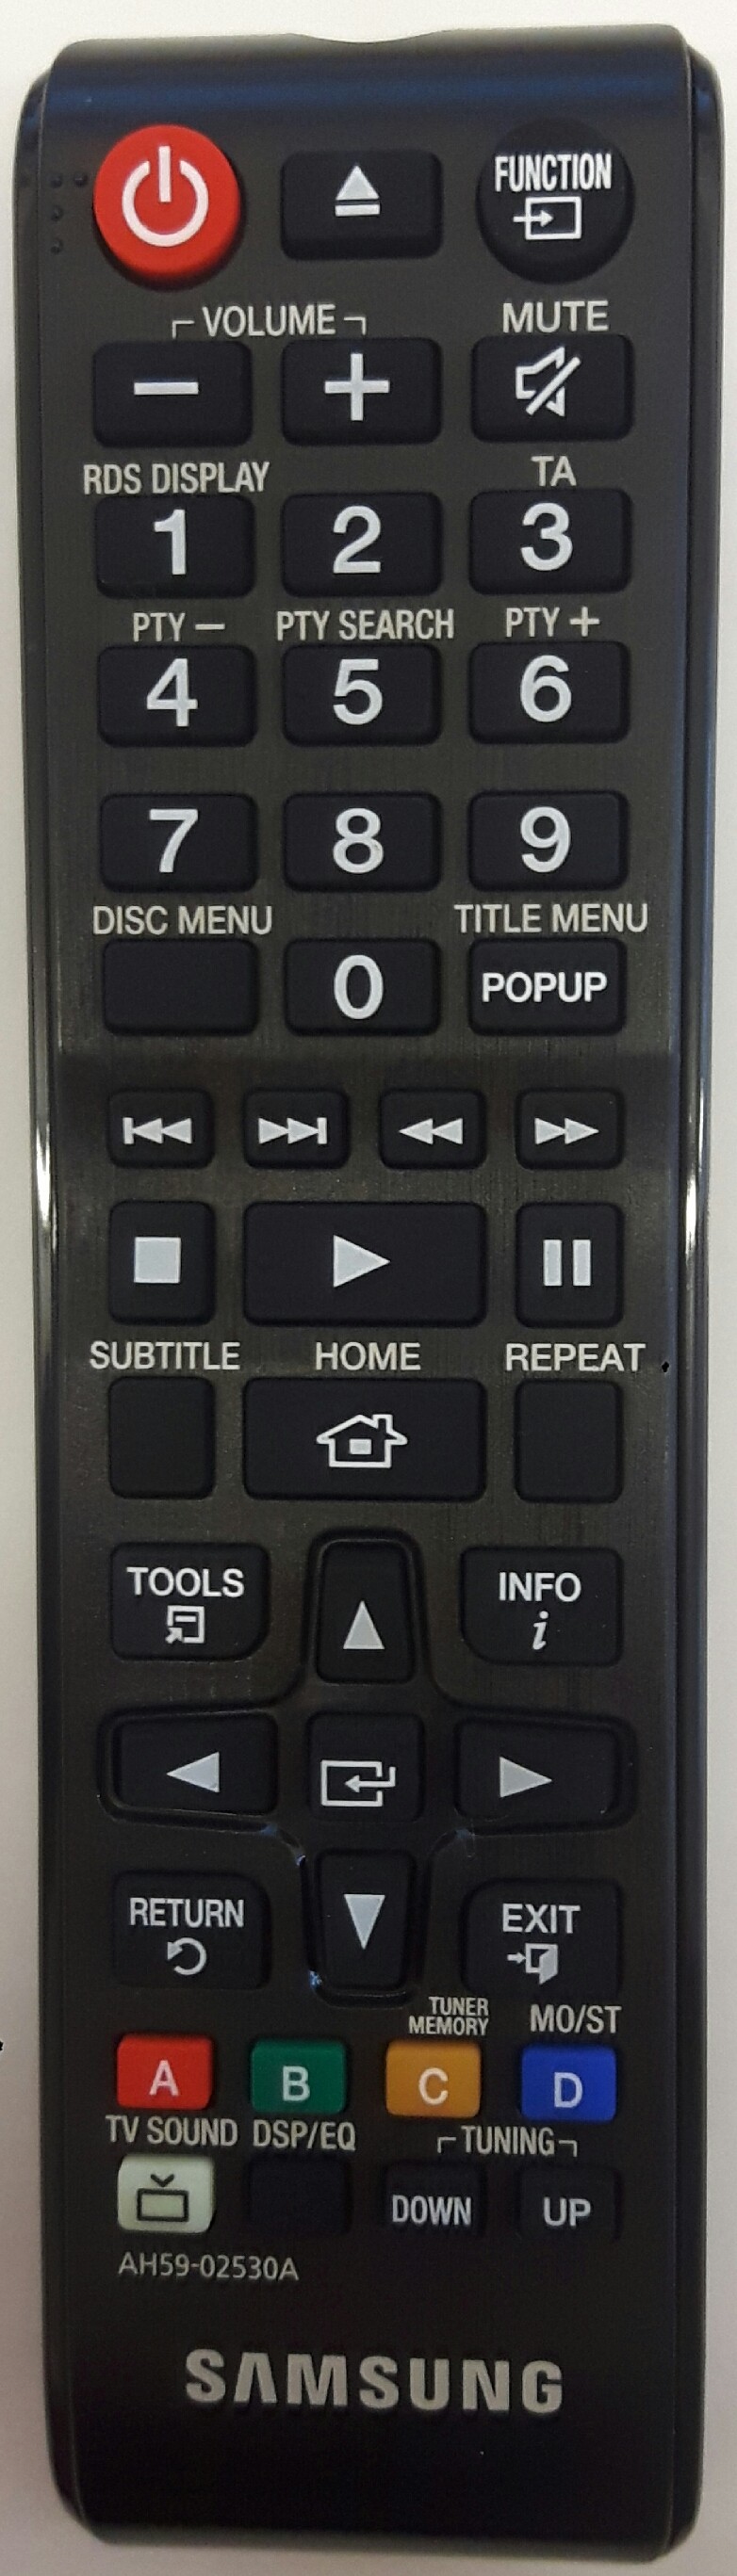 SAMSUNG HT-J4530/XN Remote Control Original